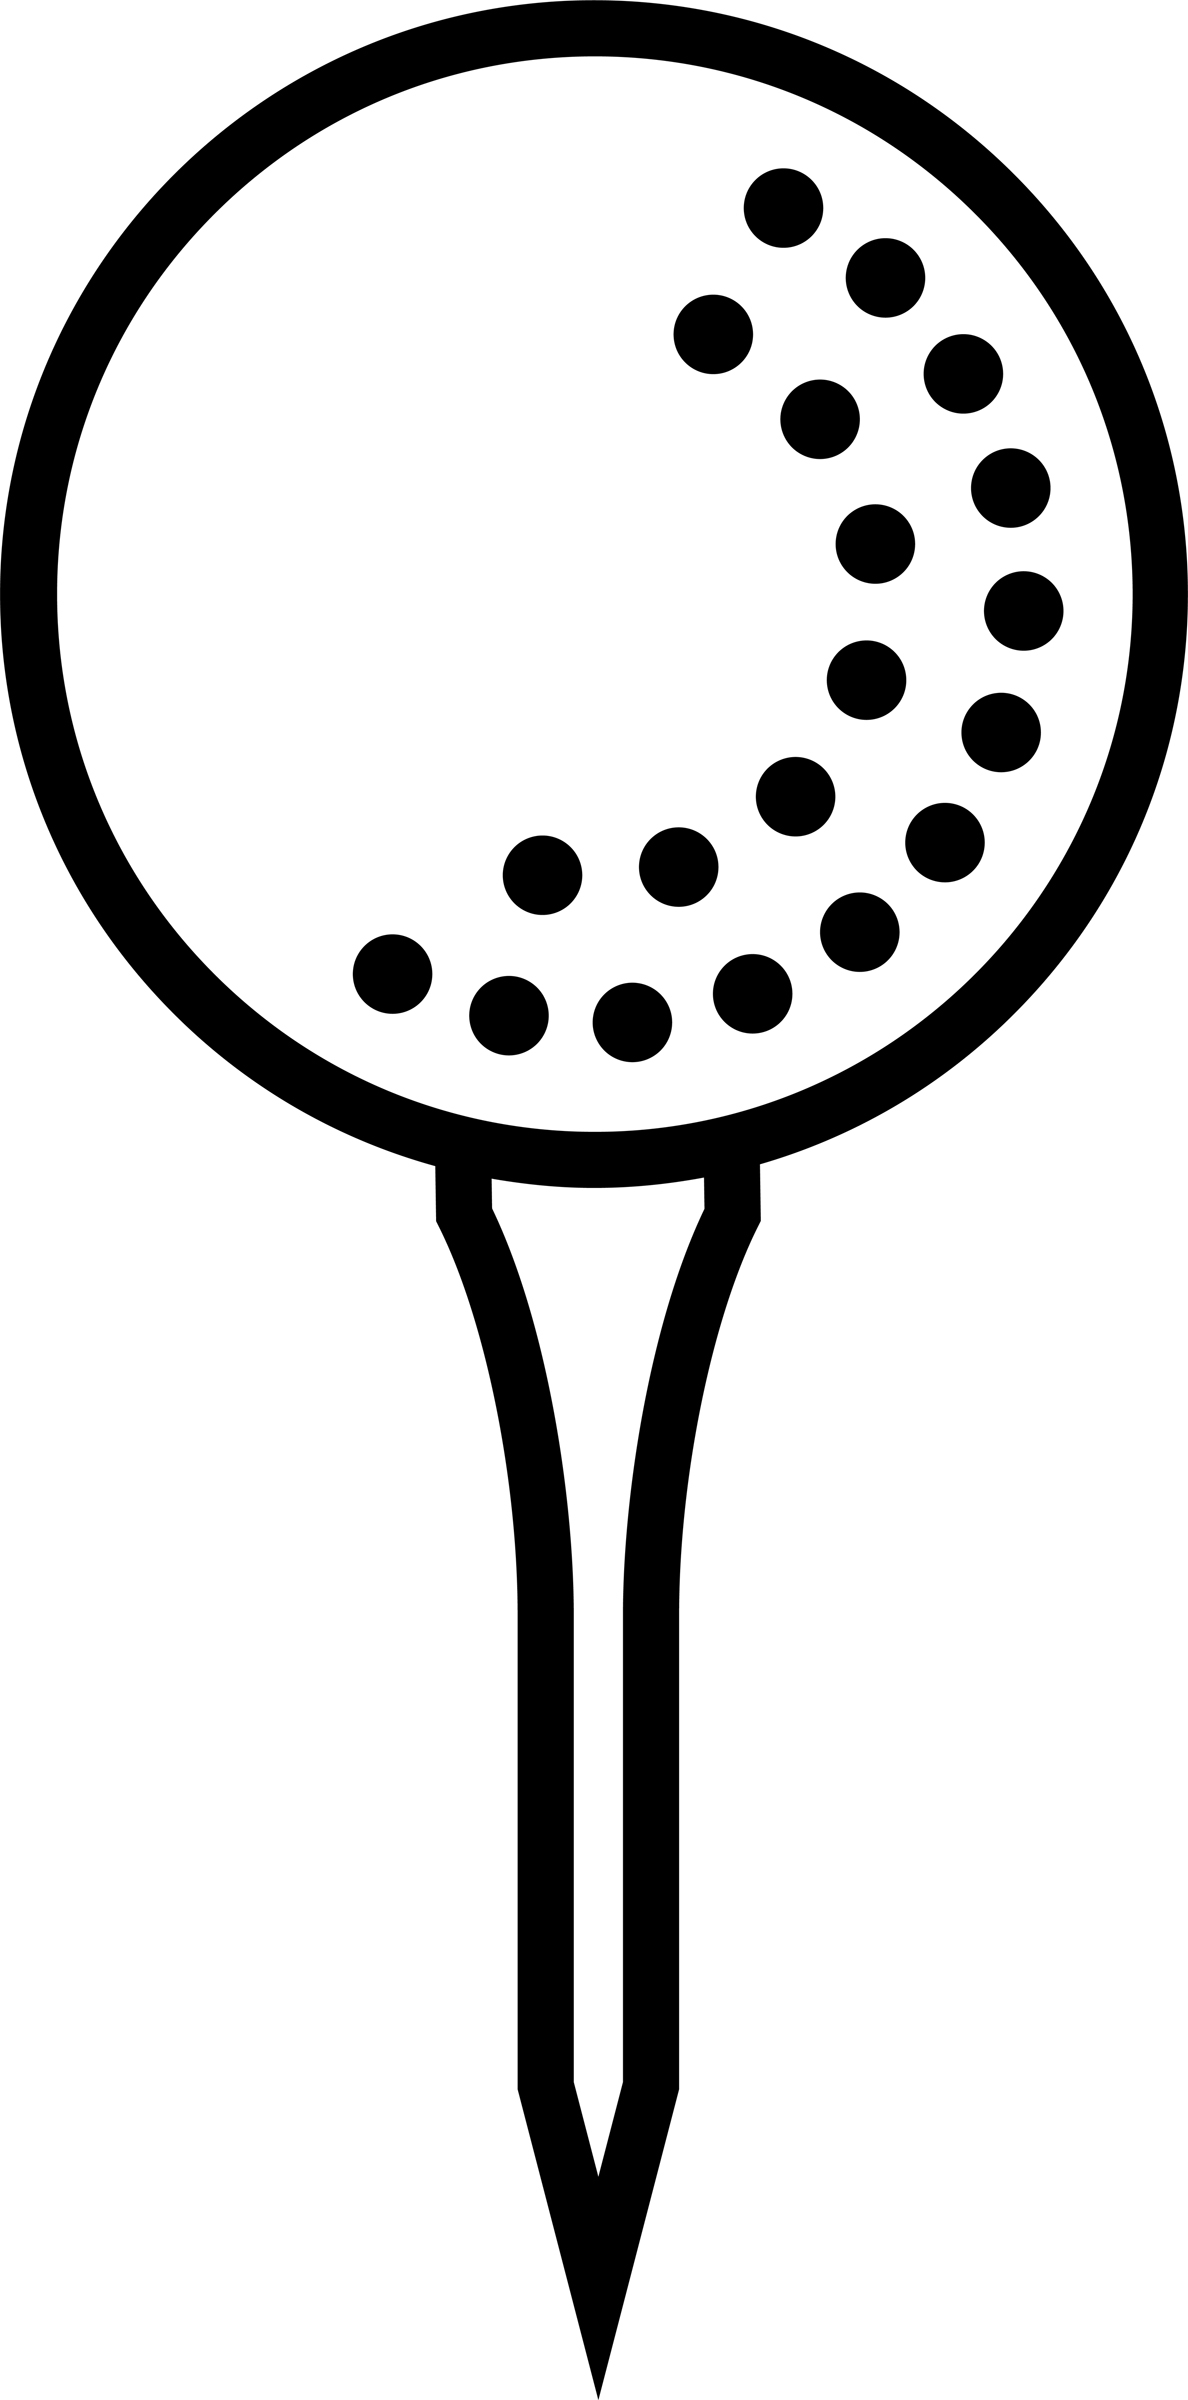 Golfer golf ball clip art black and white image #35927